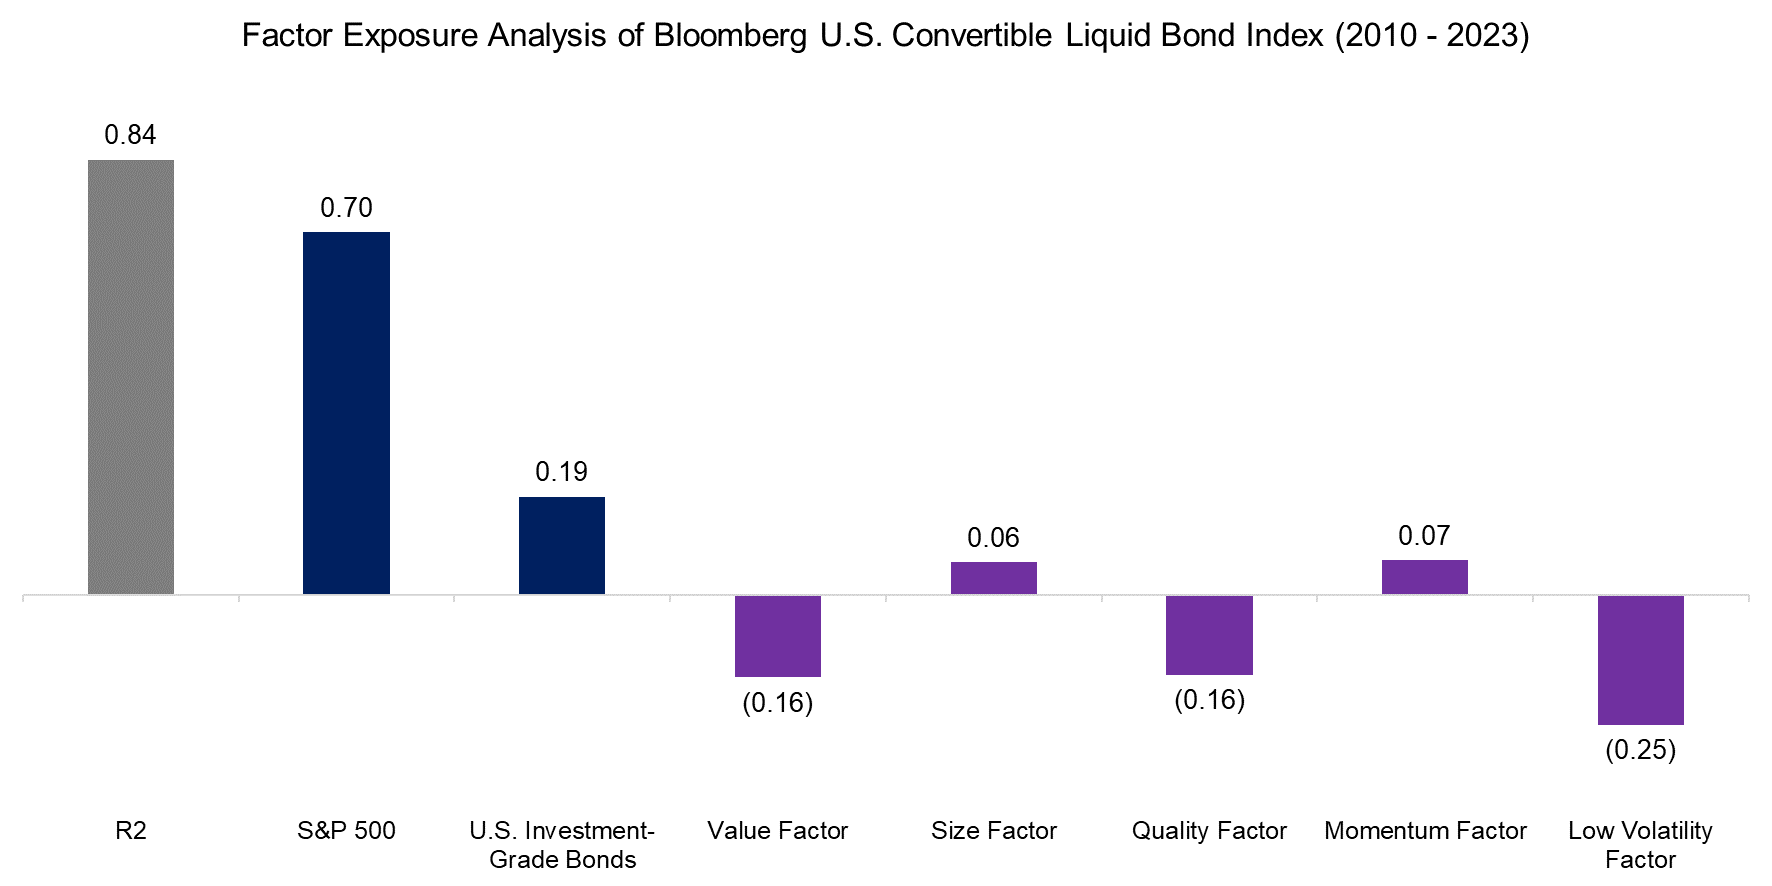 Factor Exposure Analysis of Bloomberg U.S. Convertible Liquid Bond Index (2010 - 2023)